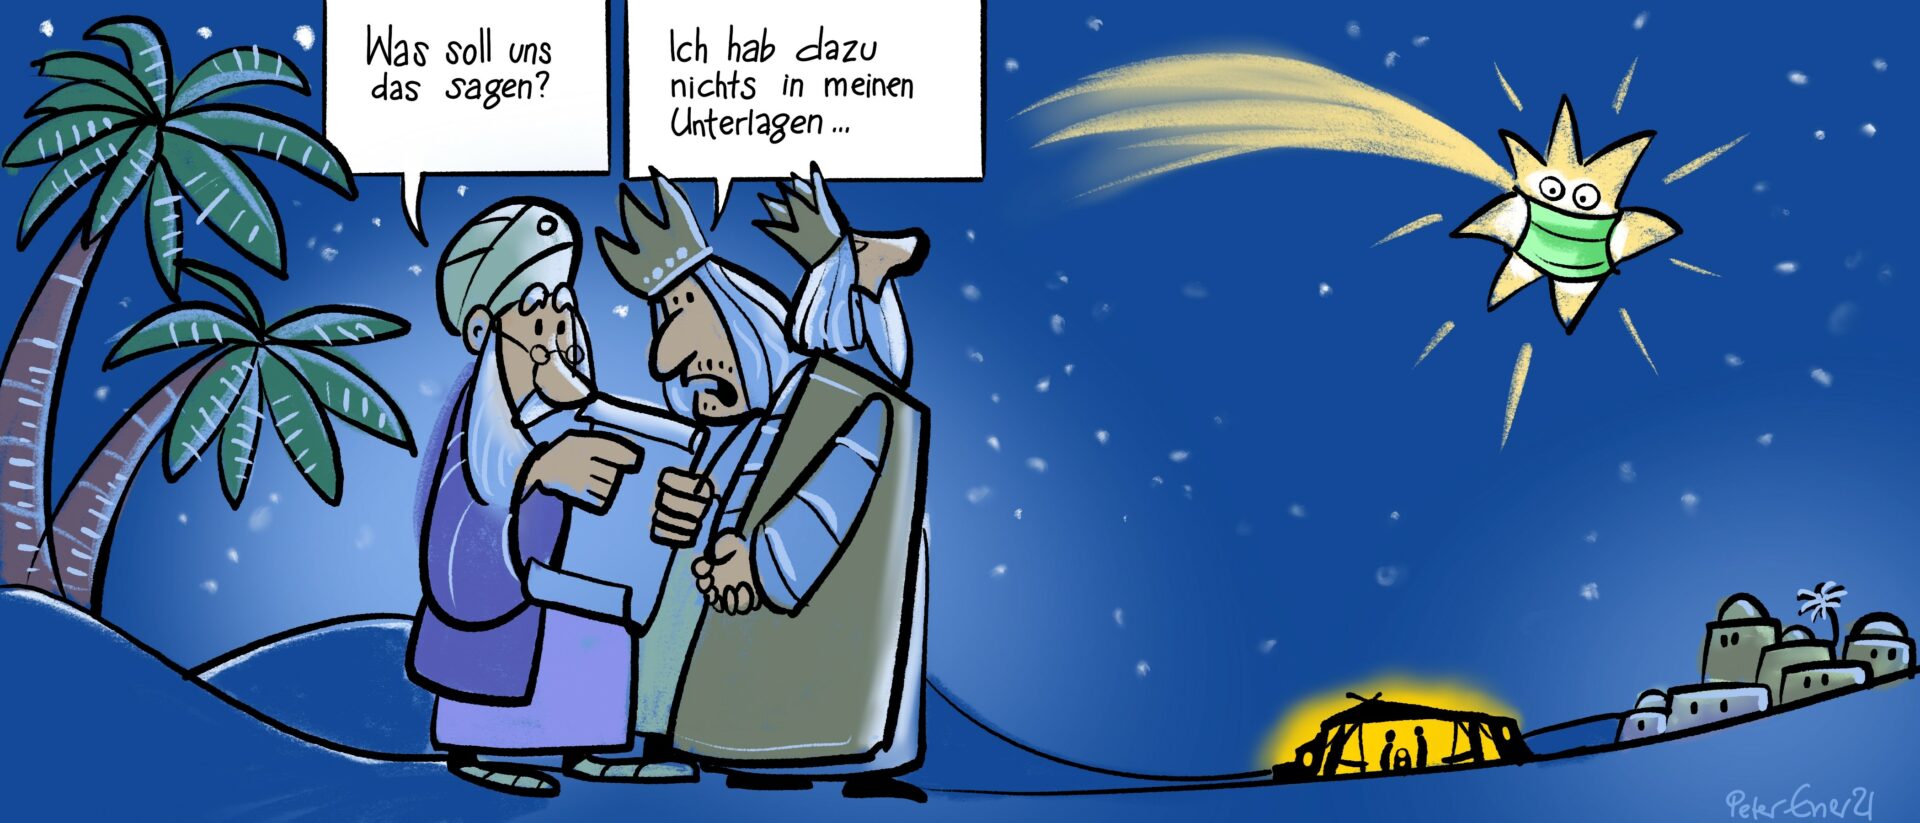 Karikatur zum Dreikönigsfest.